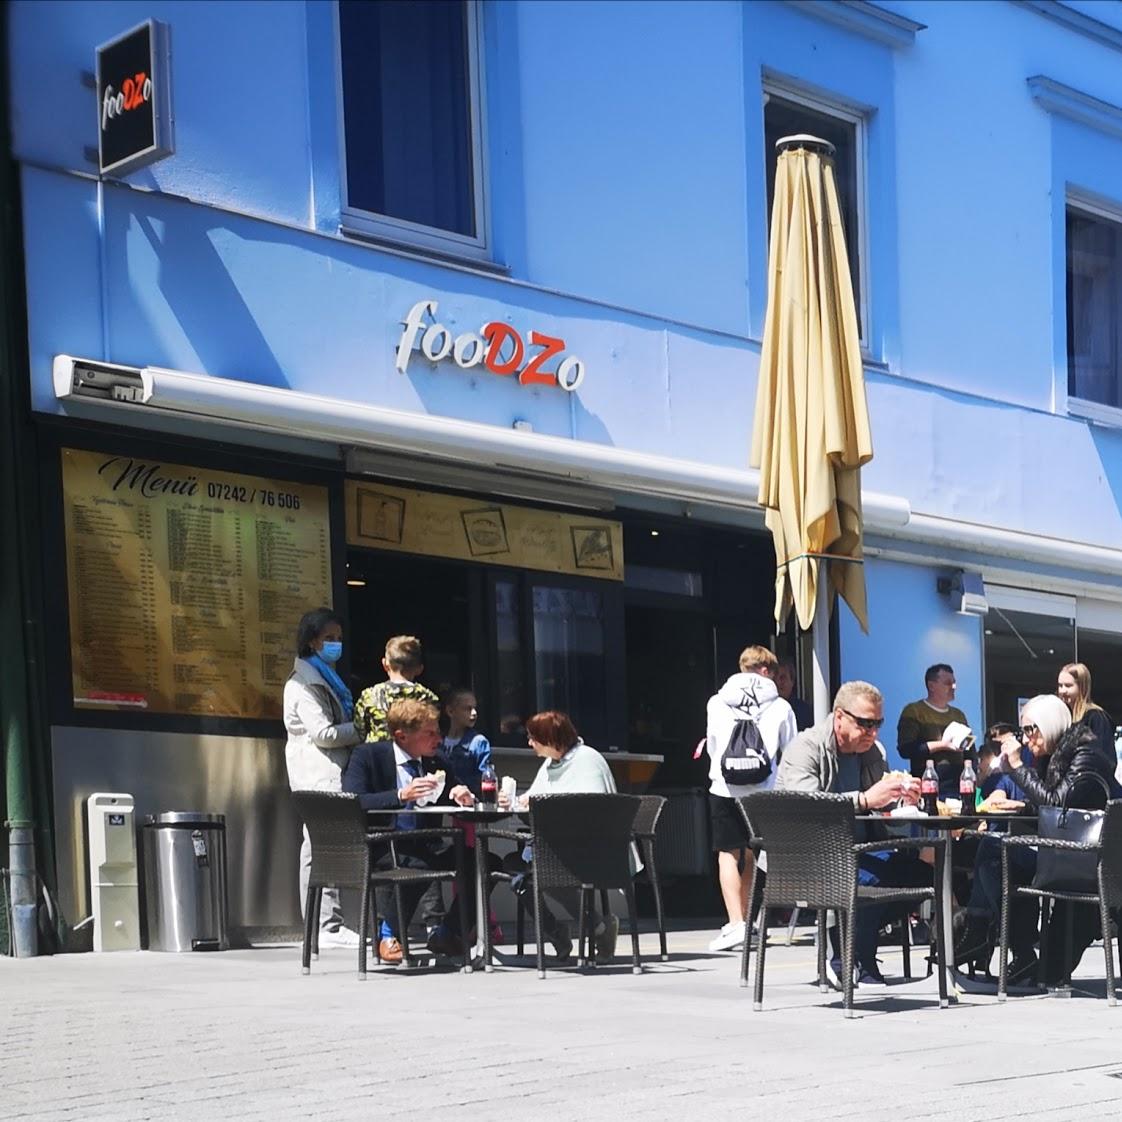 Restaurant "fooDZo" in Wels